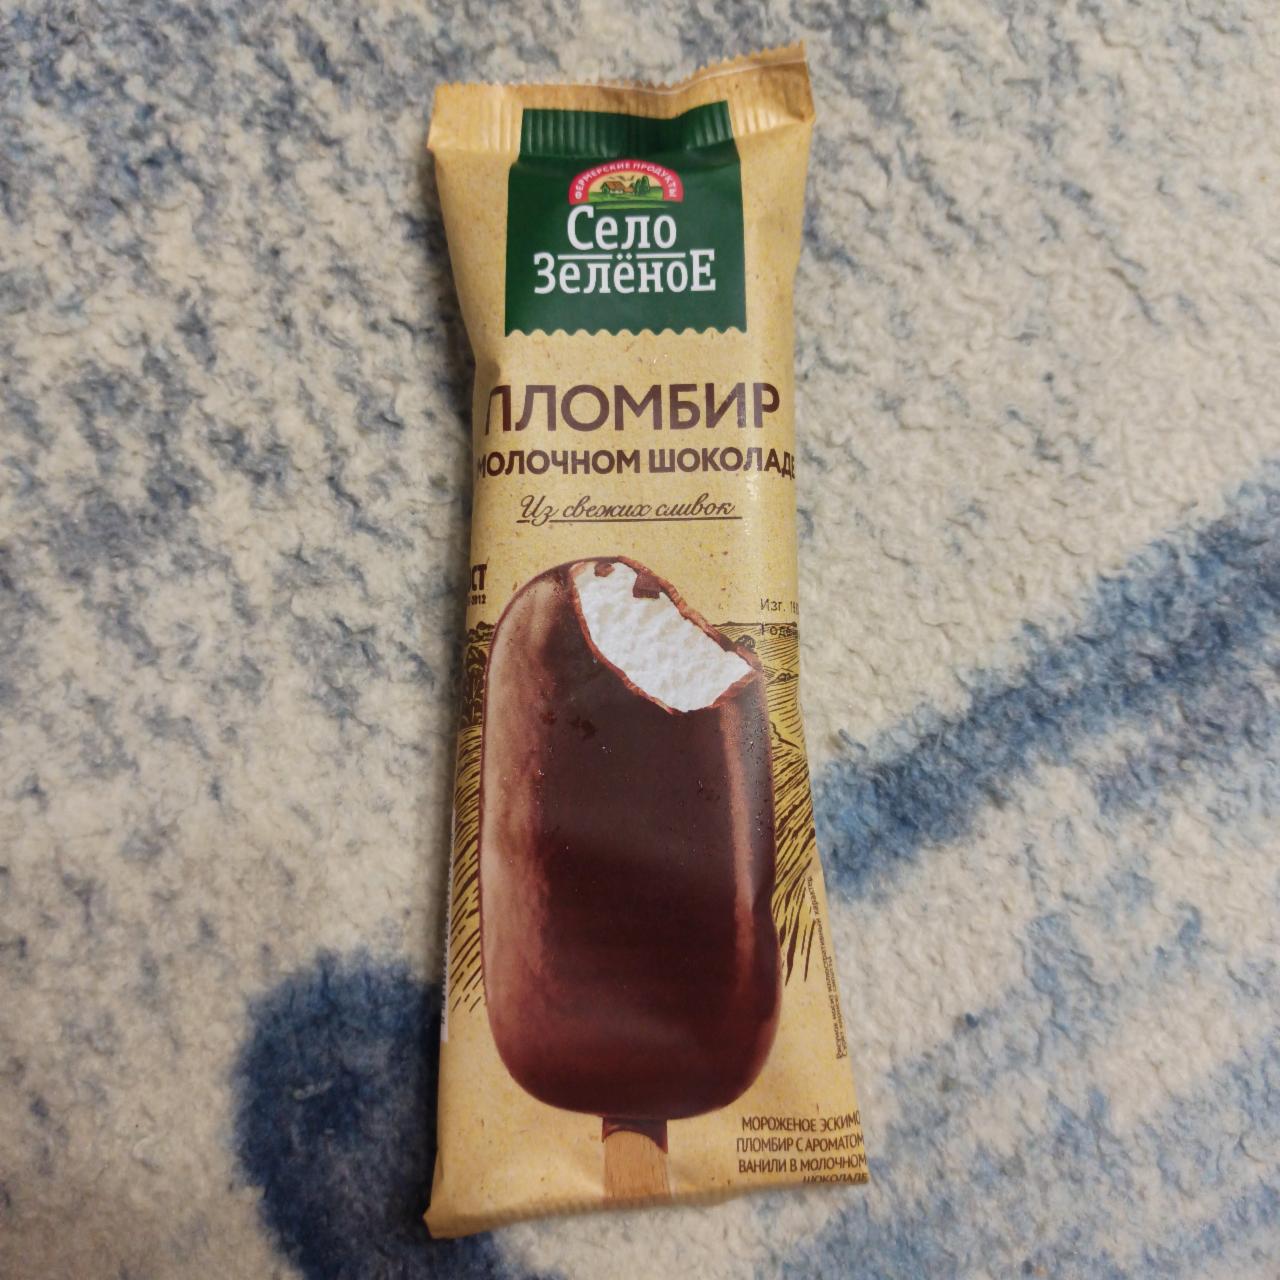 Фото - Мороженое Пломбир с ароматом ванили в молочном шоколаде Село зеленое